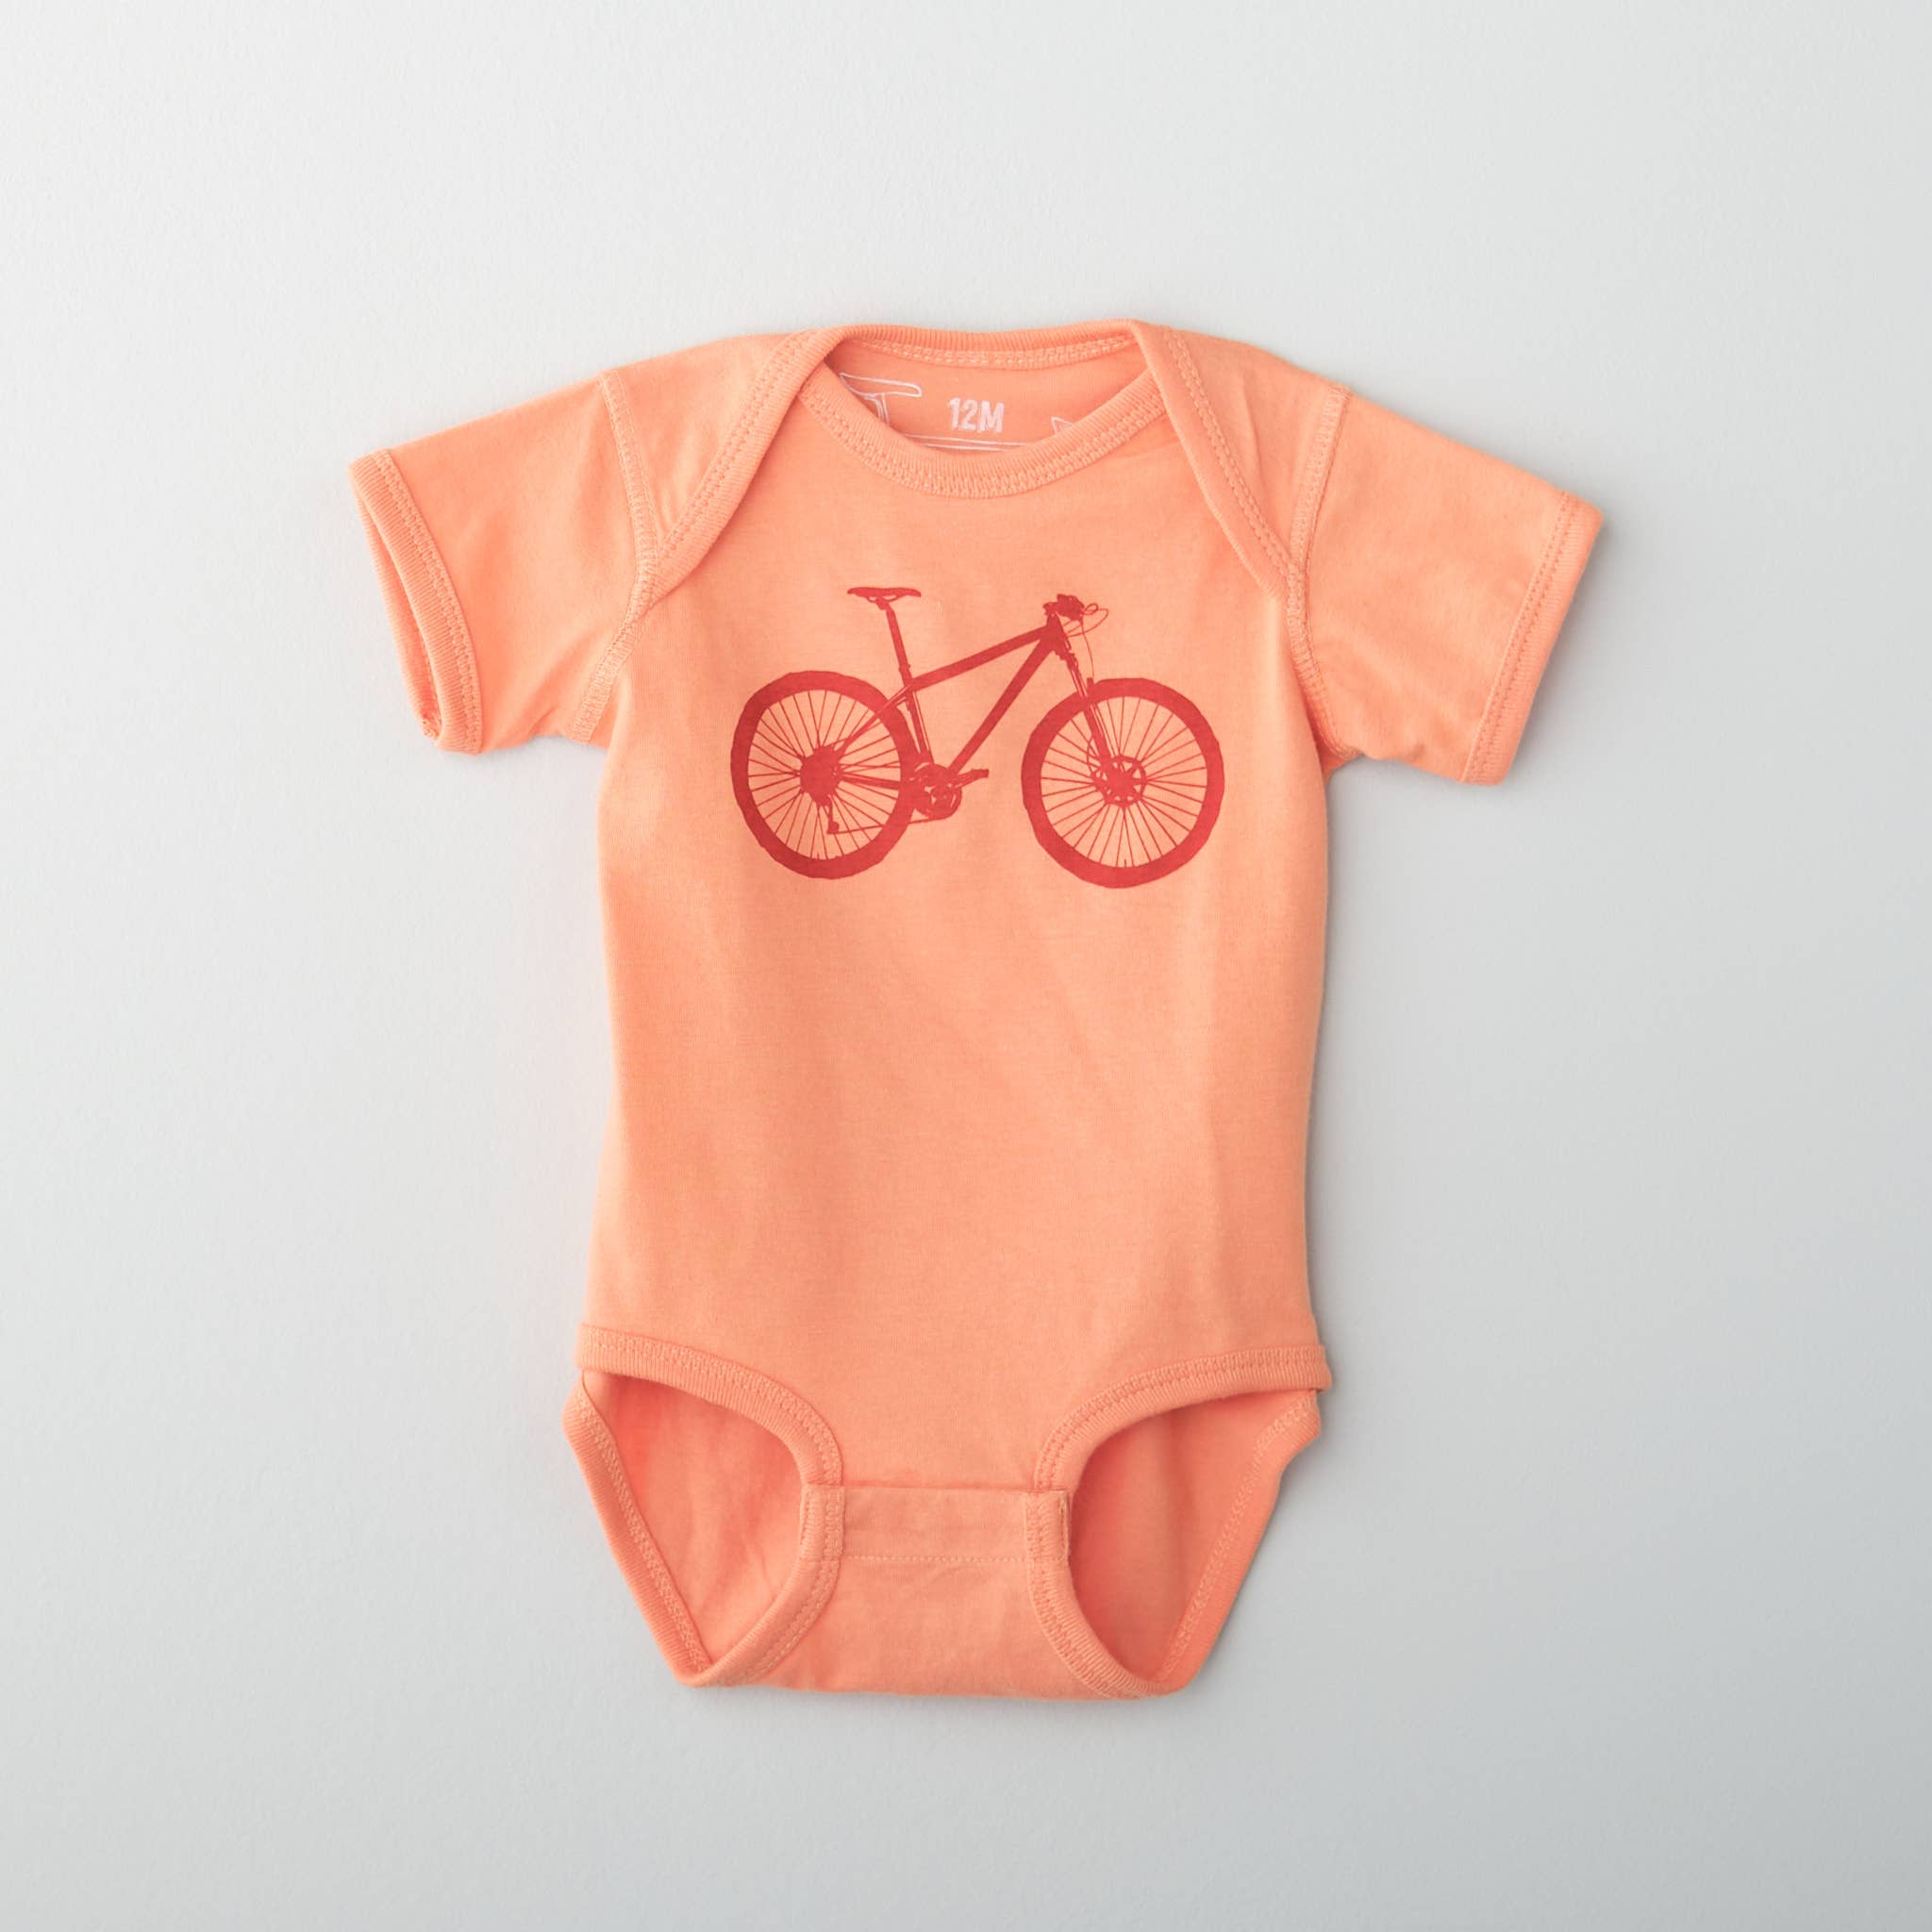 orange onesie for baby with bike